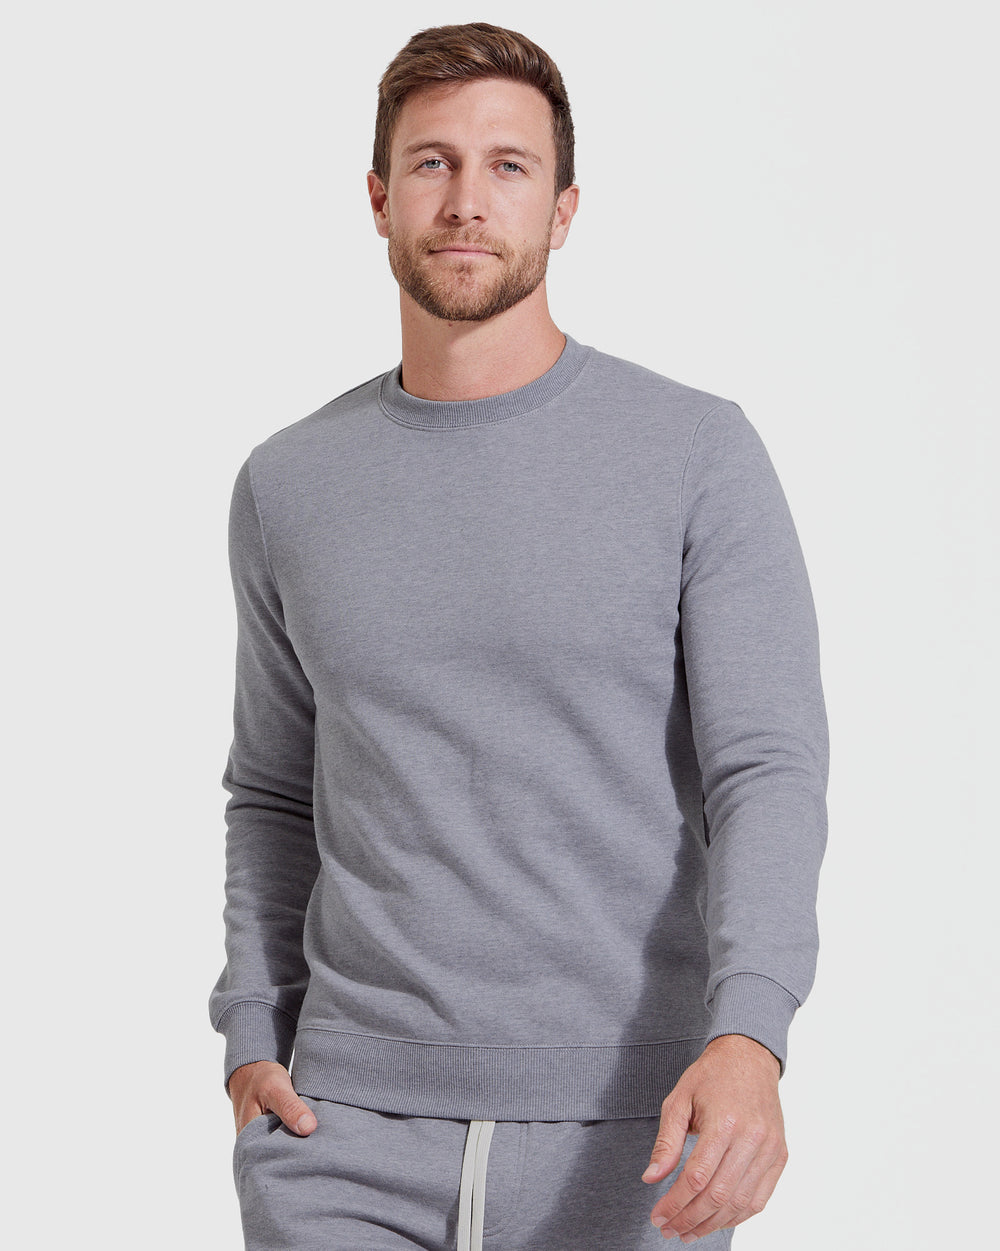 French Terry Crewneck Sweatshirt, Vintage Grey – SAULT New England